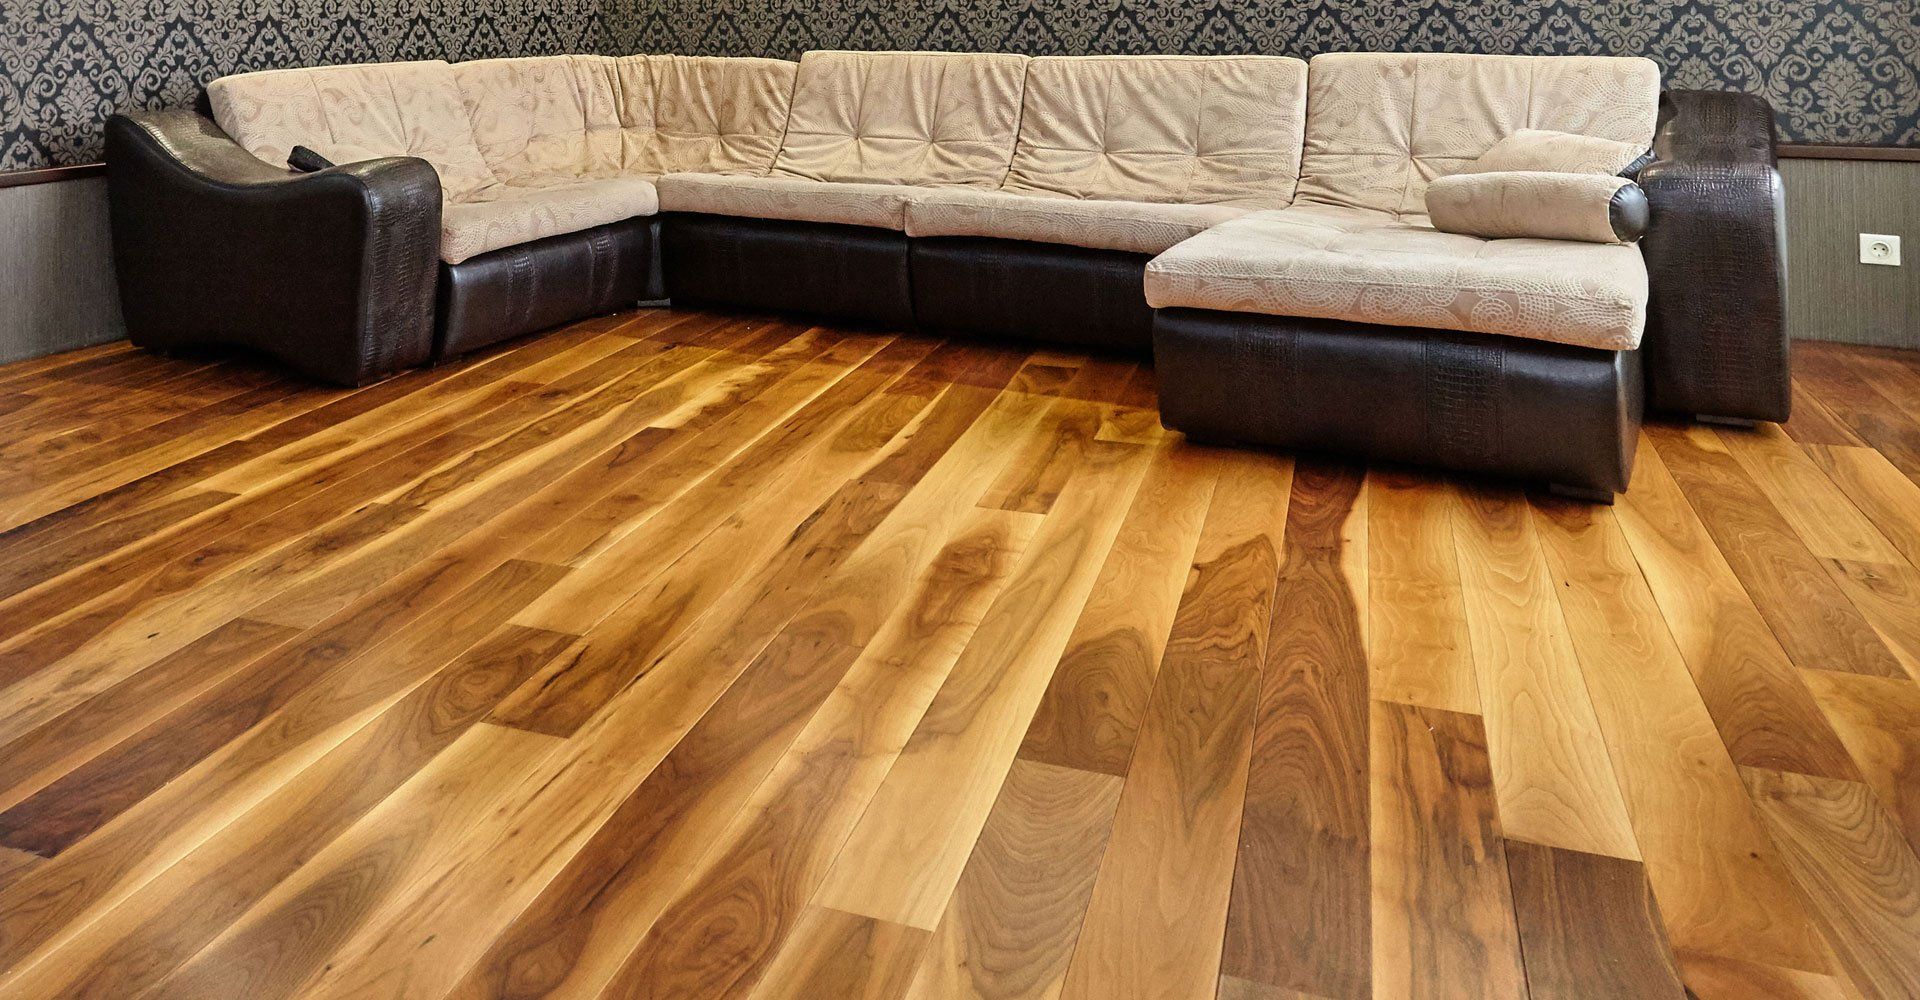 Living room with a beautiful hardwood floor